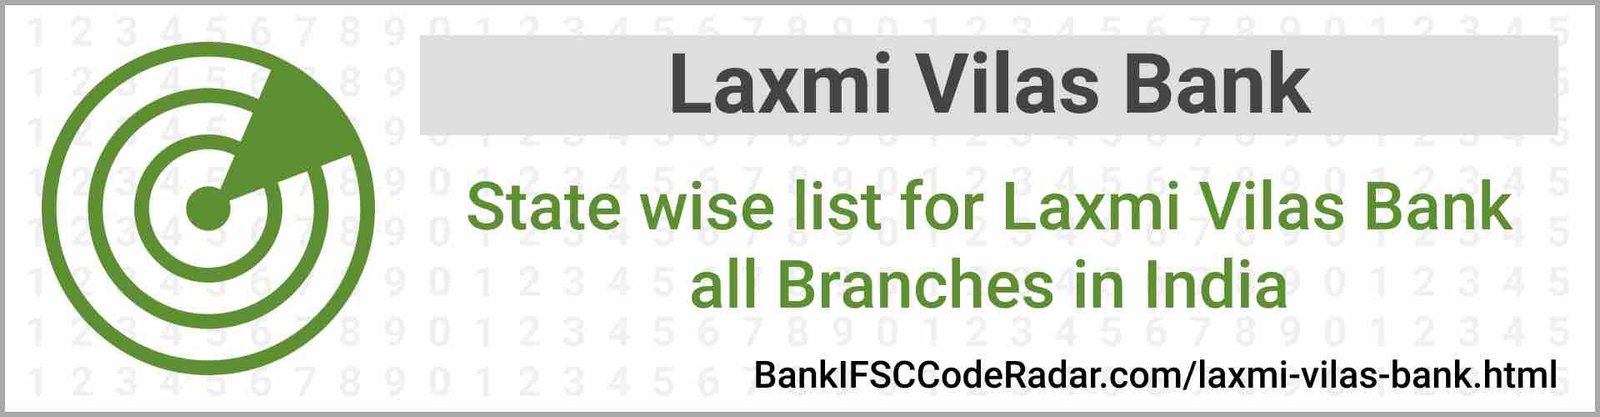 Laxmi Vilas Bank All Branches India